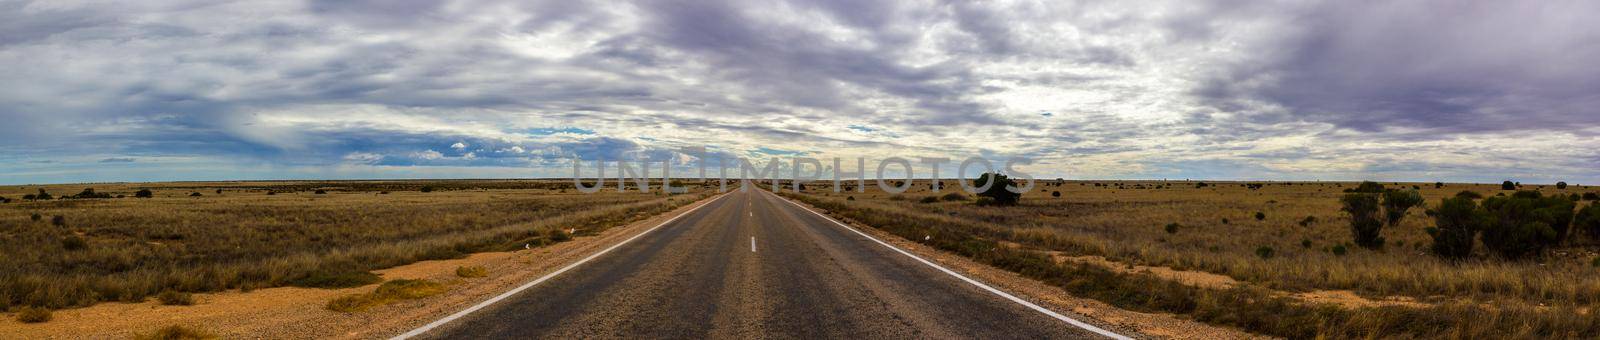 panorama of a straight road through the nullarbor dessert of Australia, South Australia, Australia by bettercallcurry